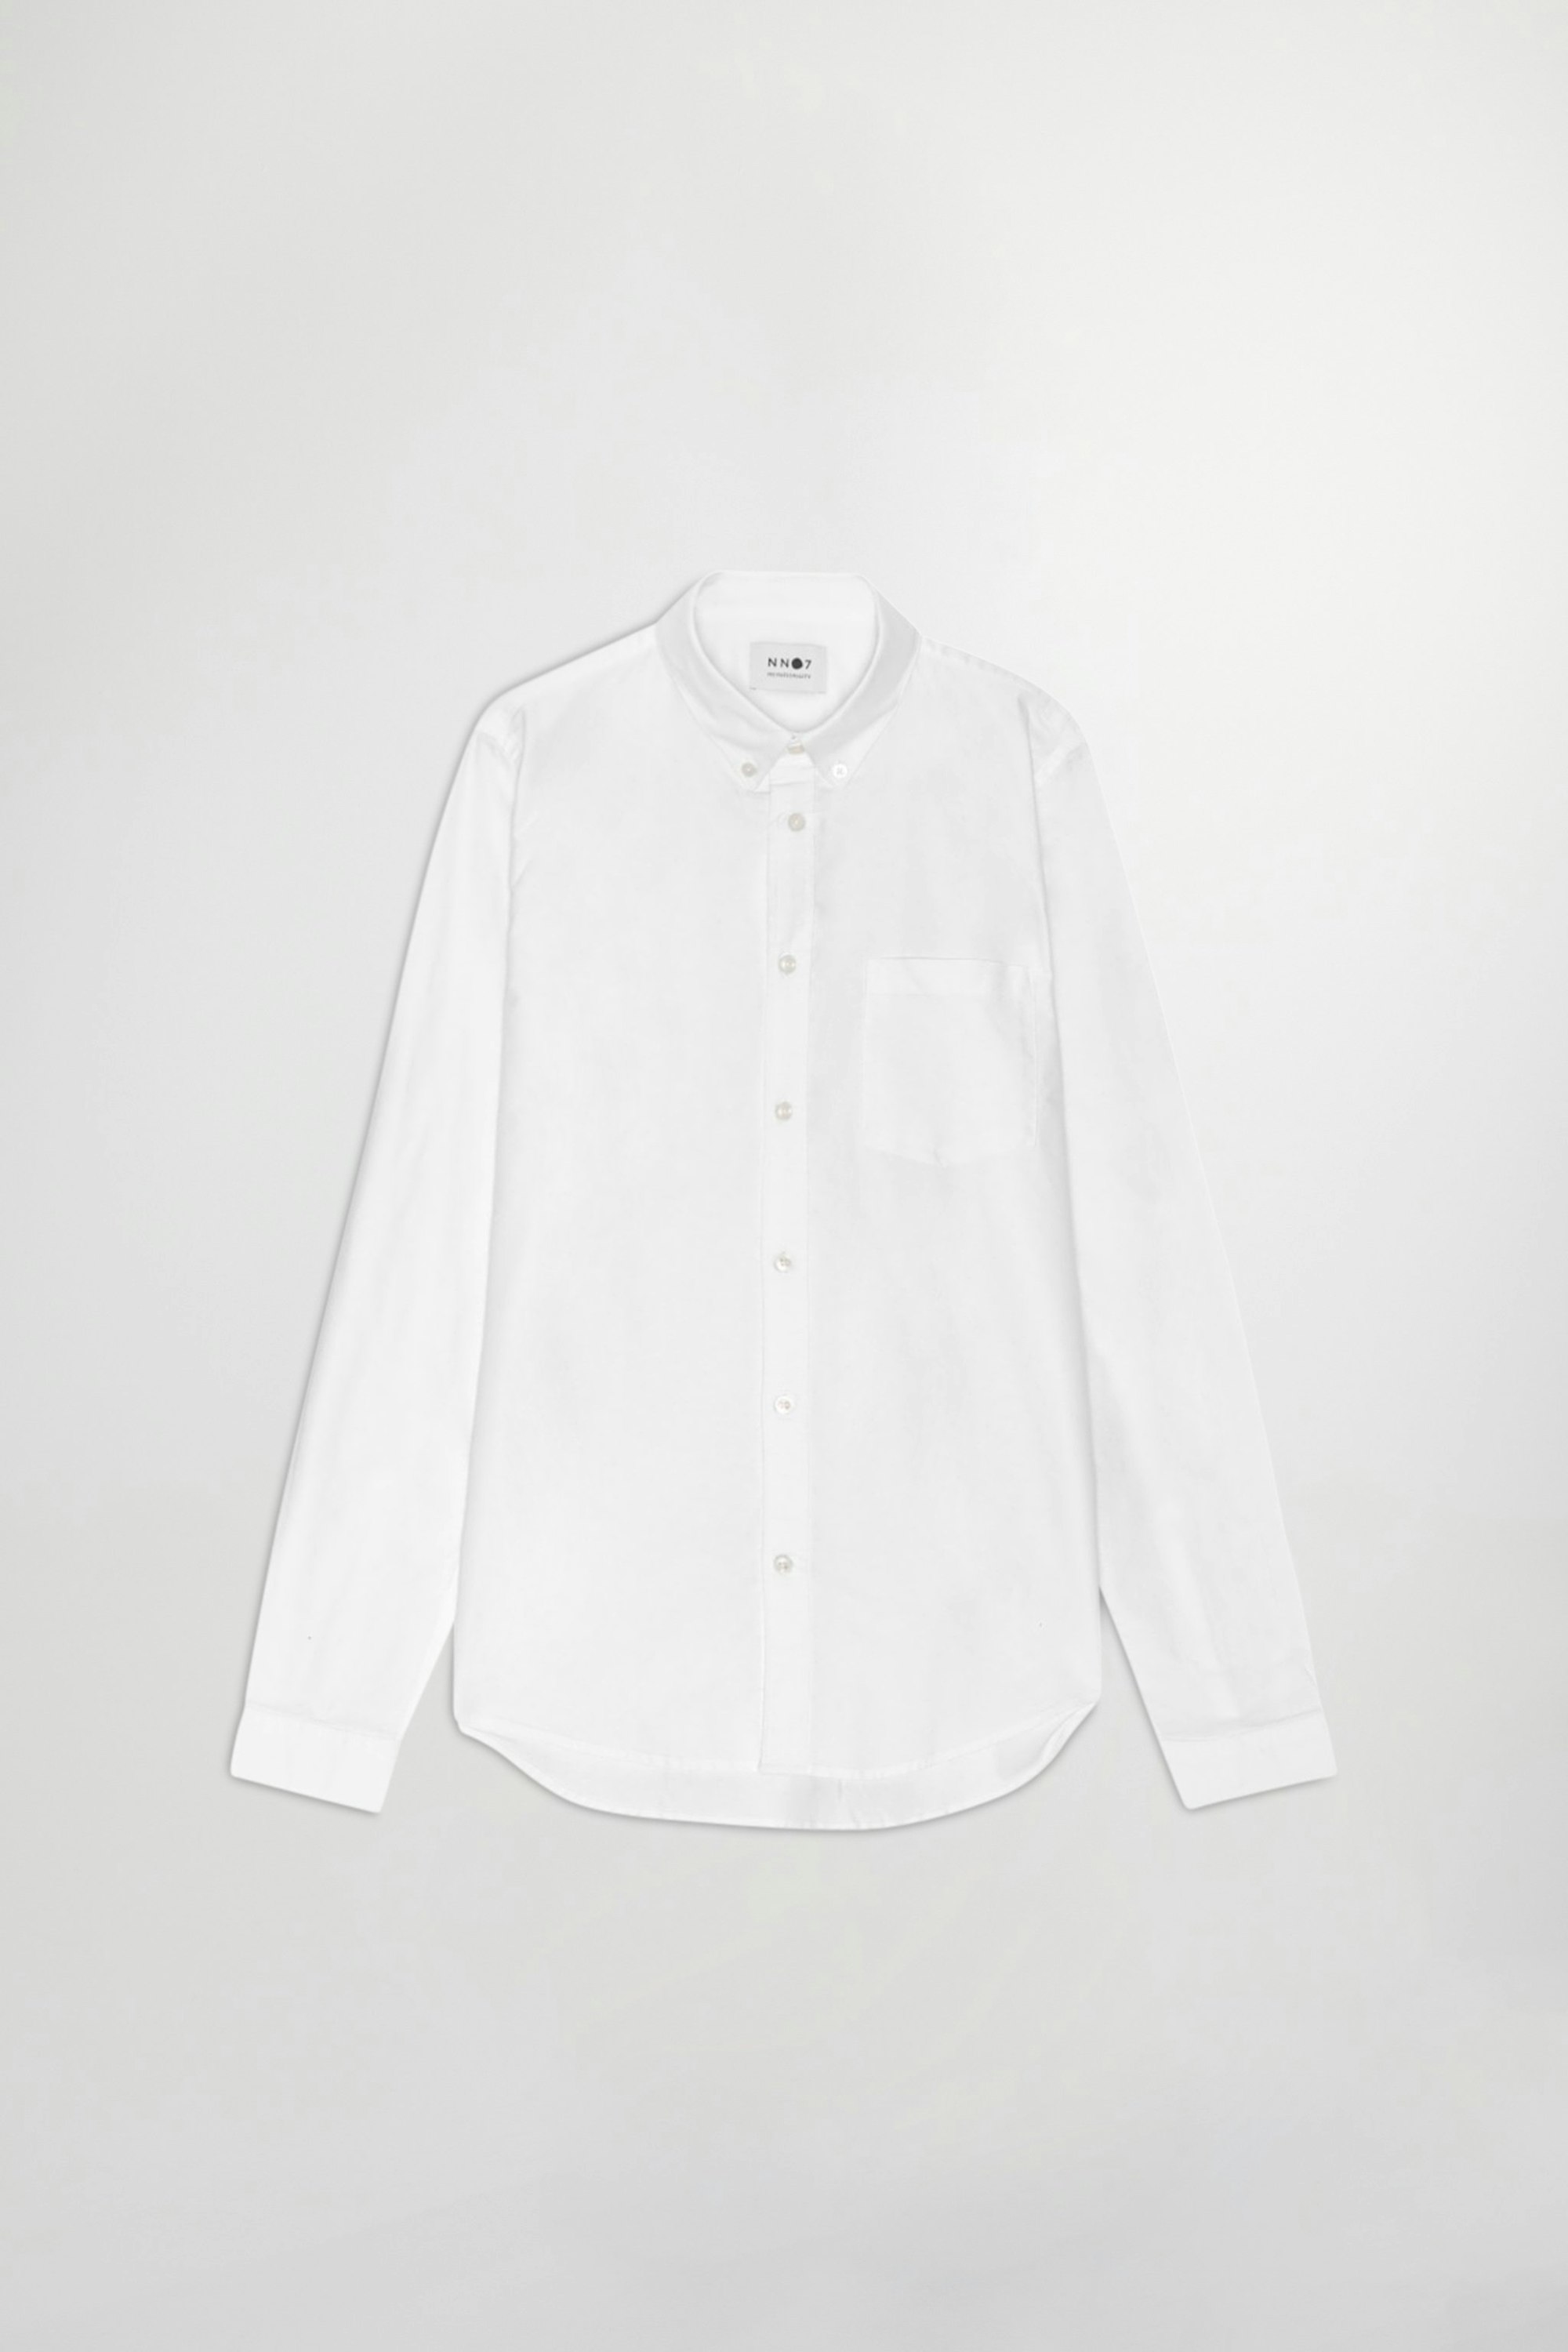 5677 at - Buy White - online shirt men\'s Sixten